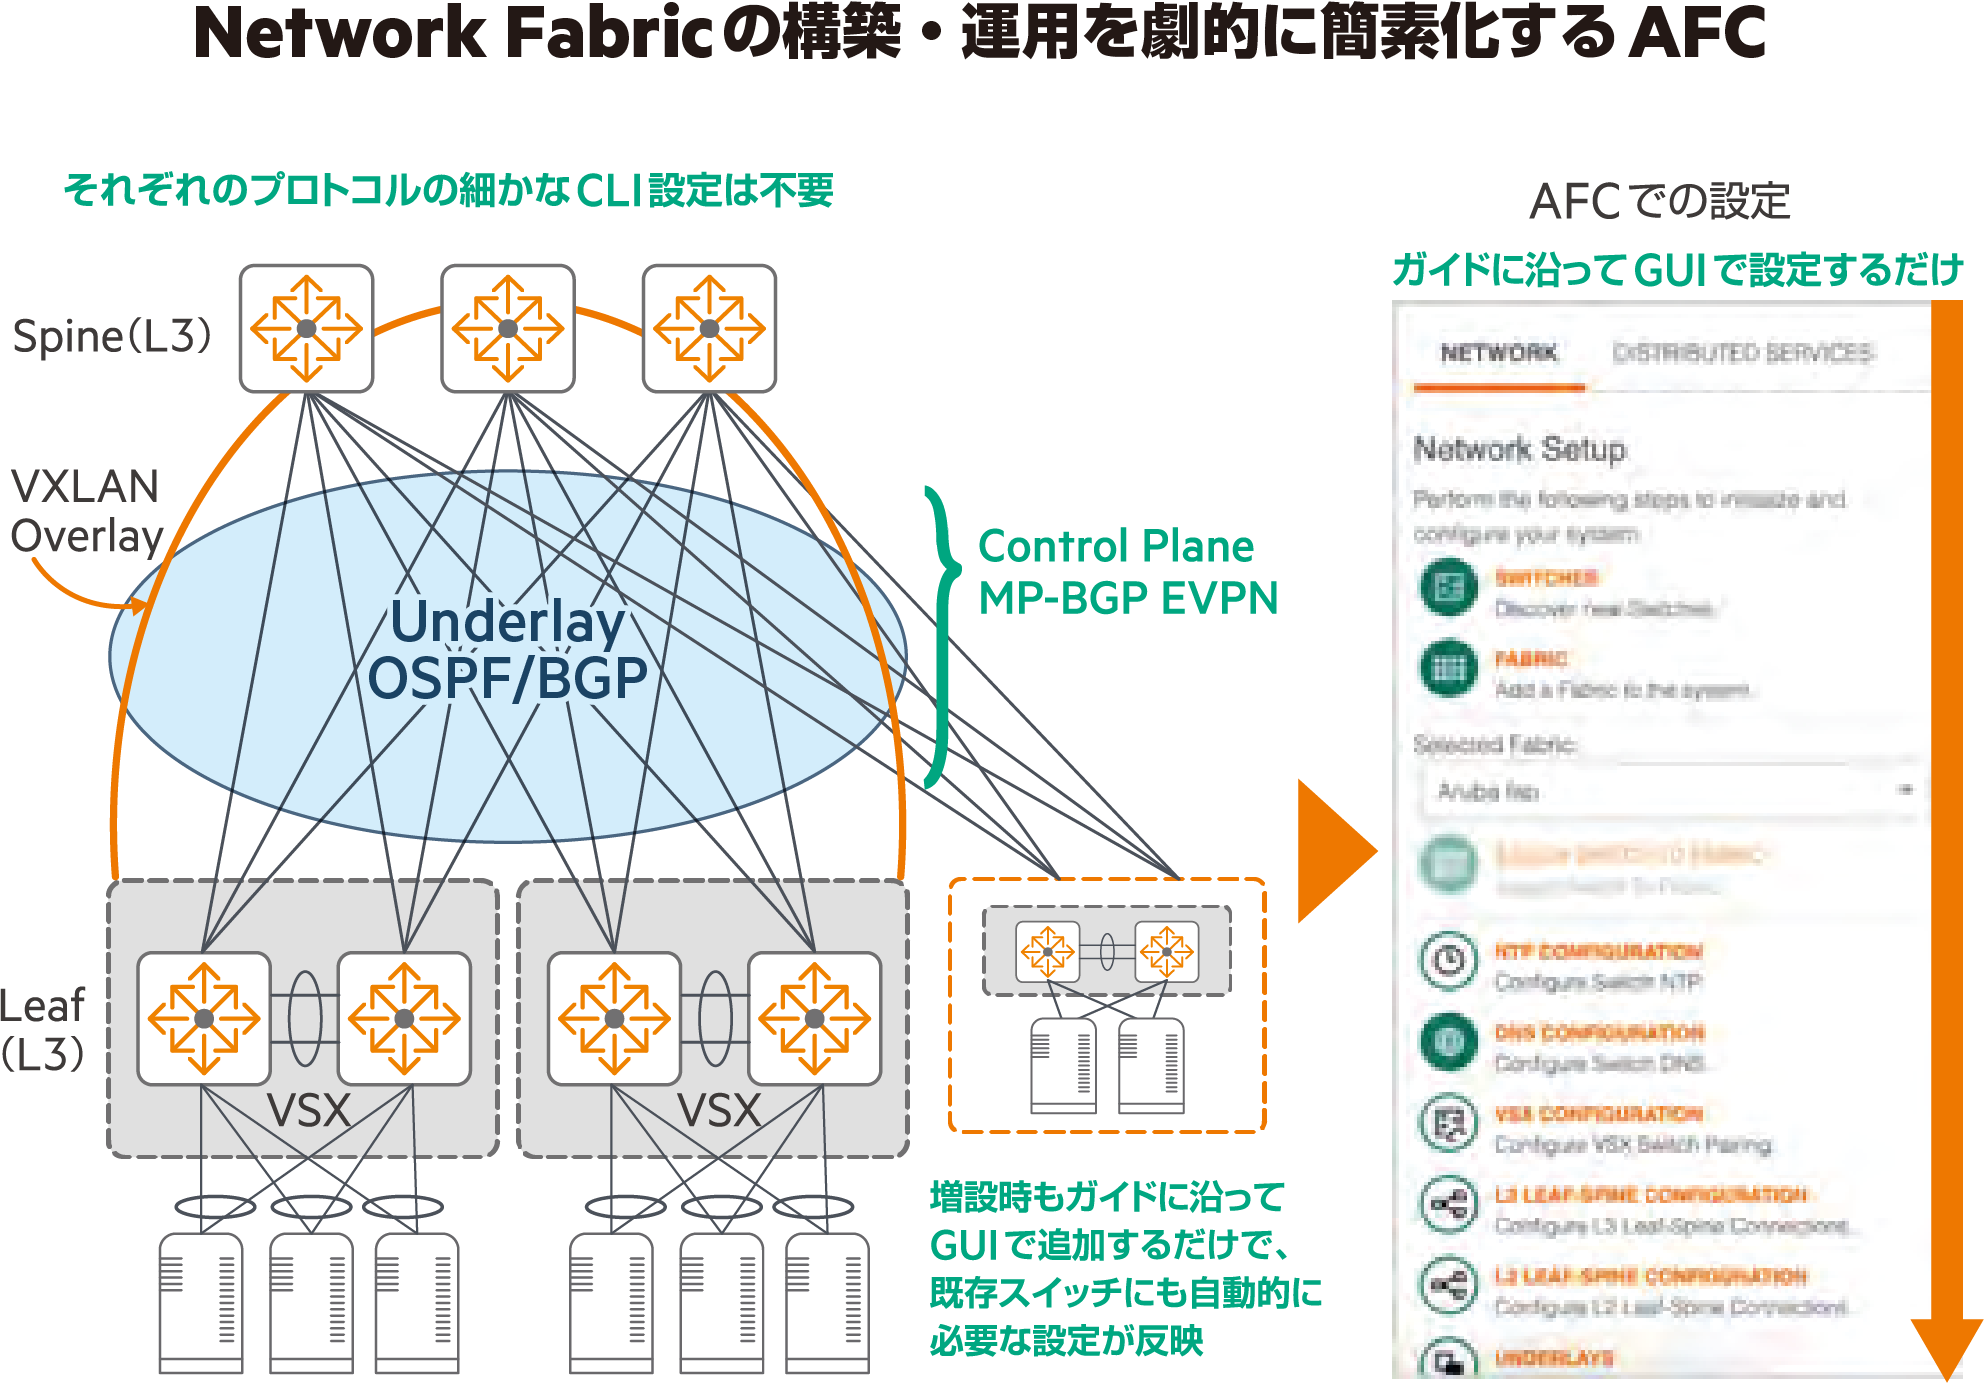 Network Fabricの構築・運用を劇的に簡素化するAFC